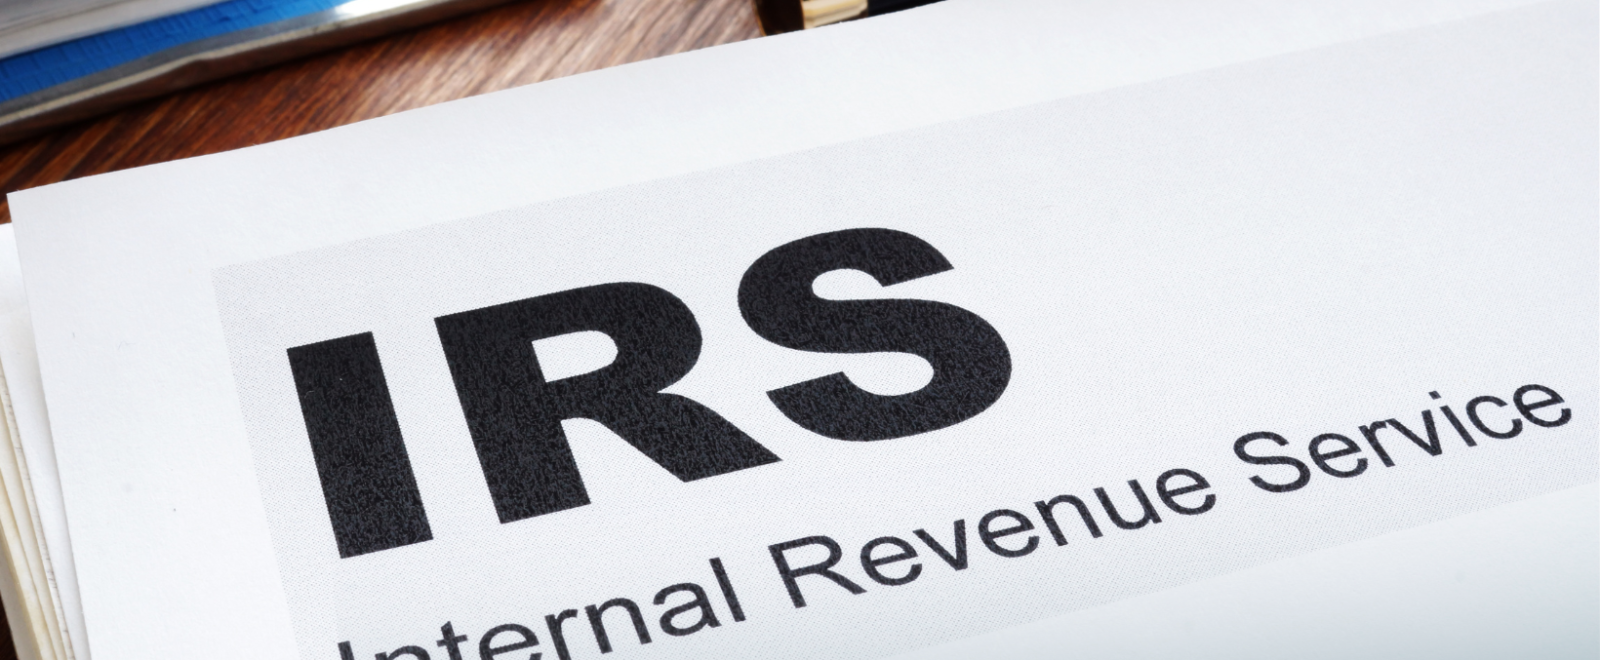 Paperwork with "Internal Revenue Service" heading